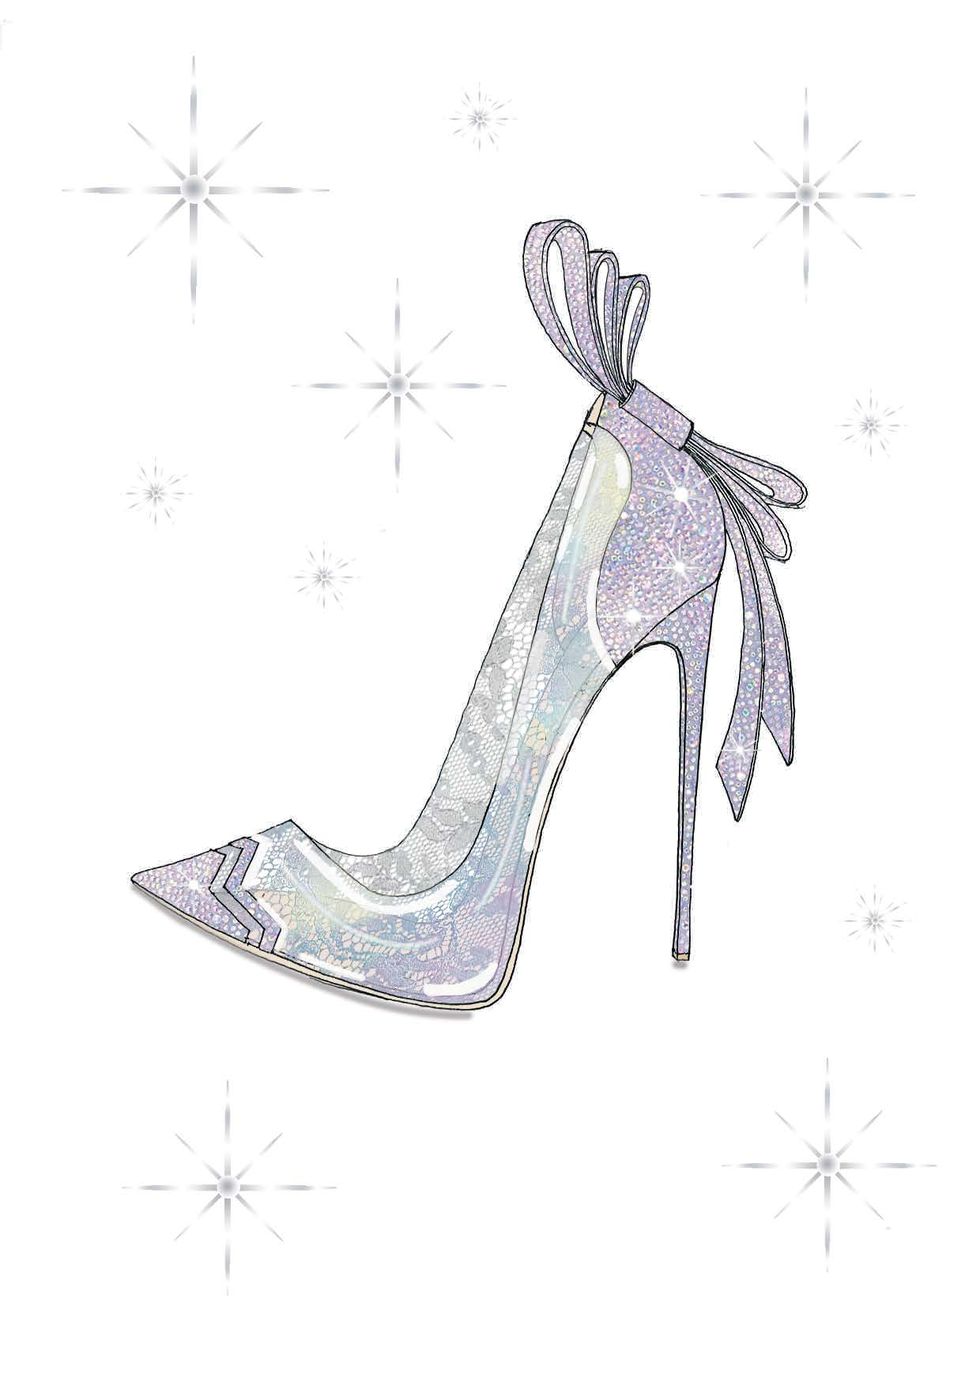 Cinderella's new slippers designed by Nicolas Kirkwood